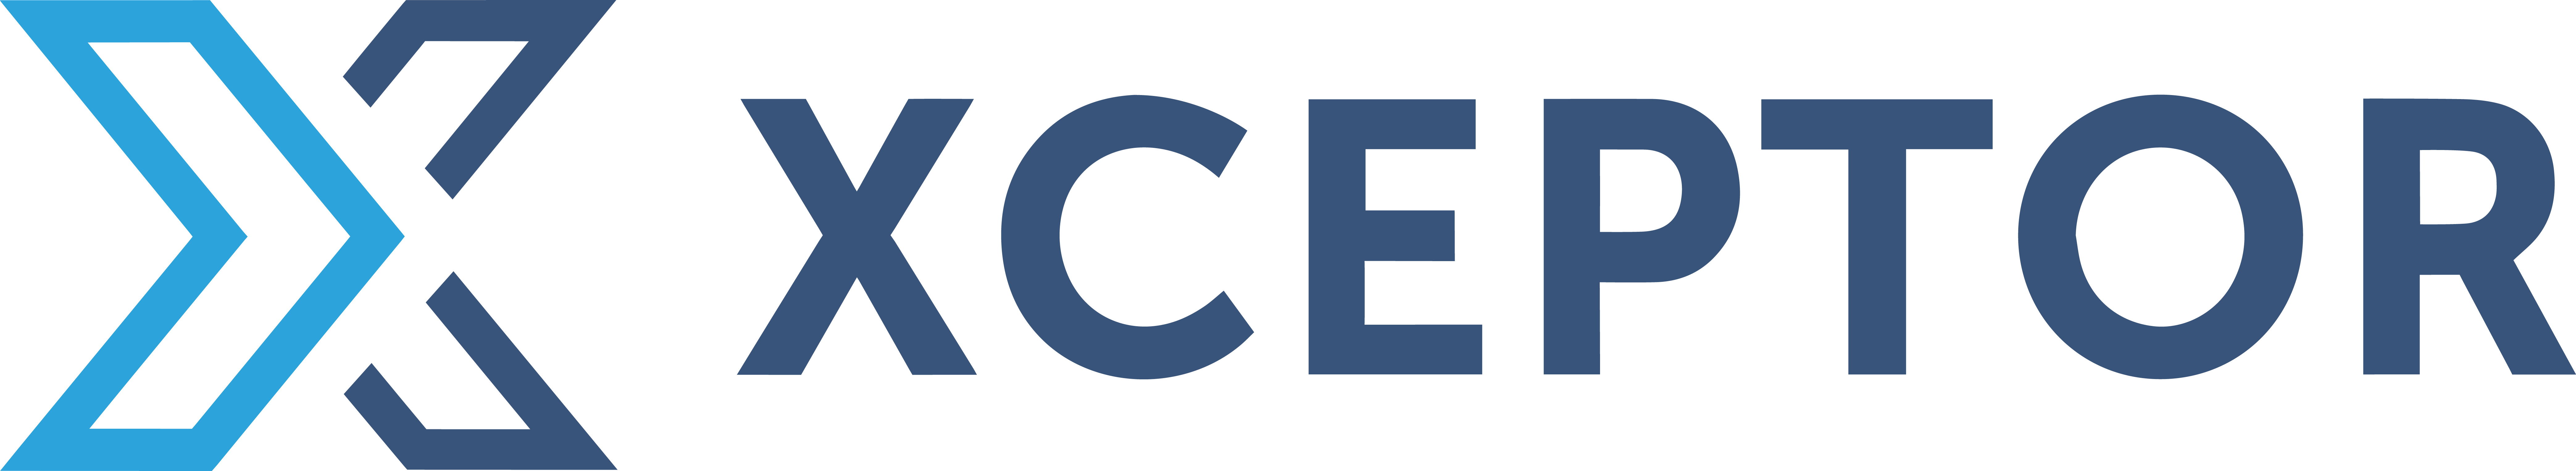 Xceptor logo